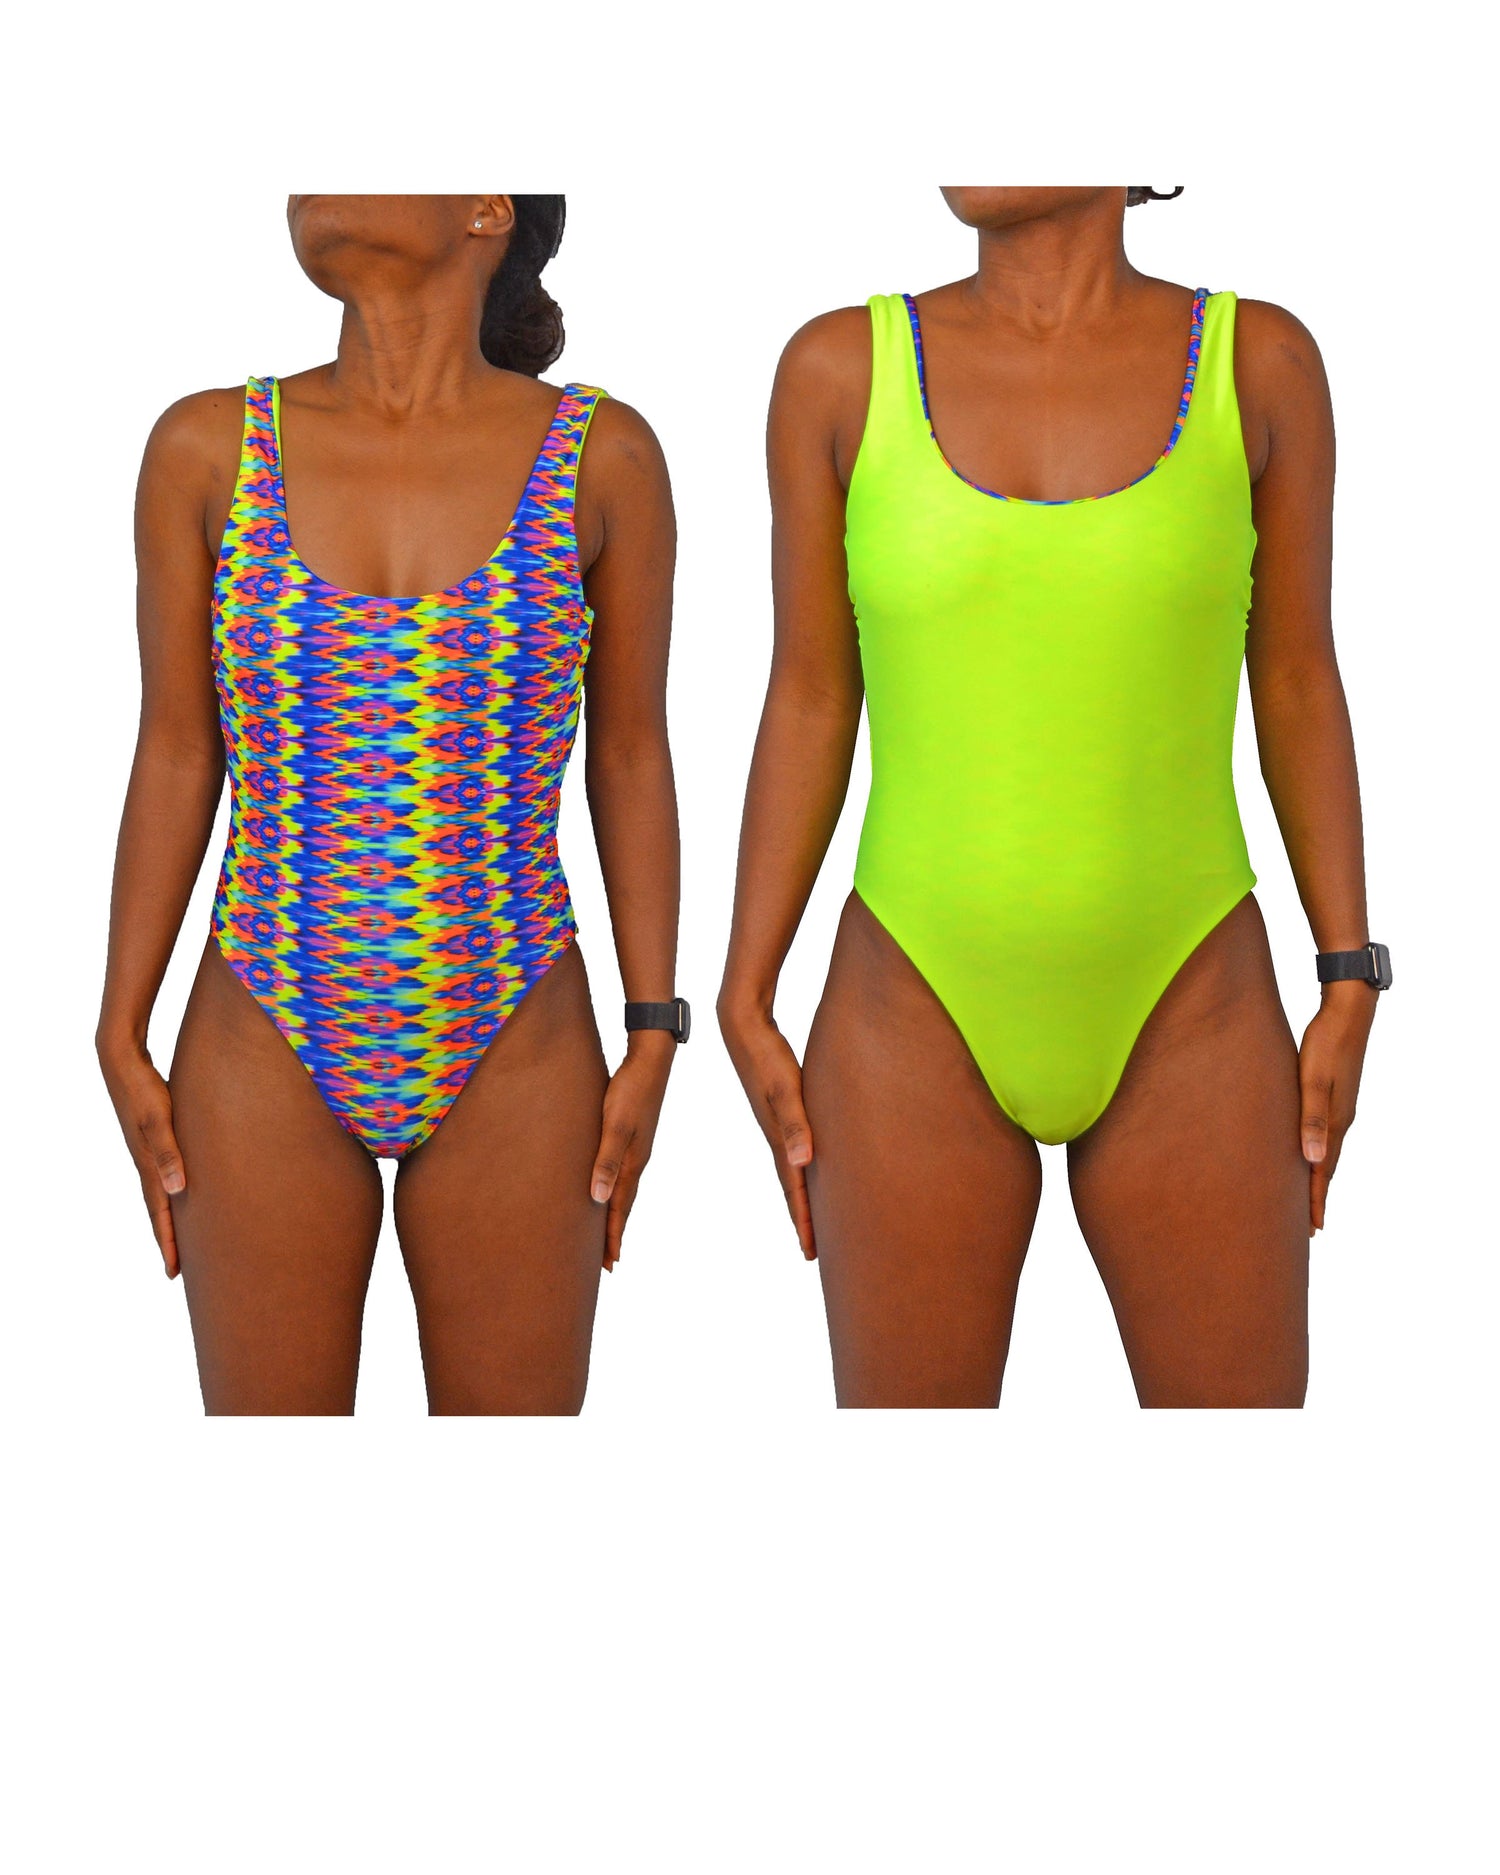 PDF Swimsuit Pattern High Cut Leg High Waist Bikini Bottom